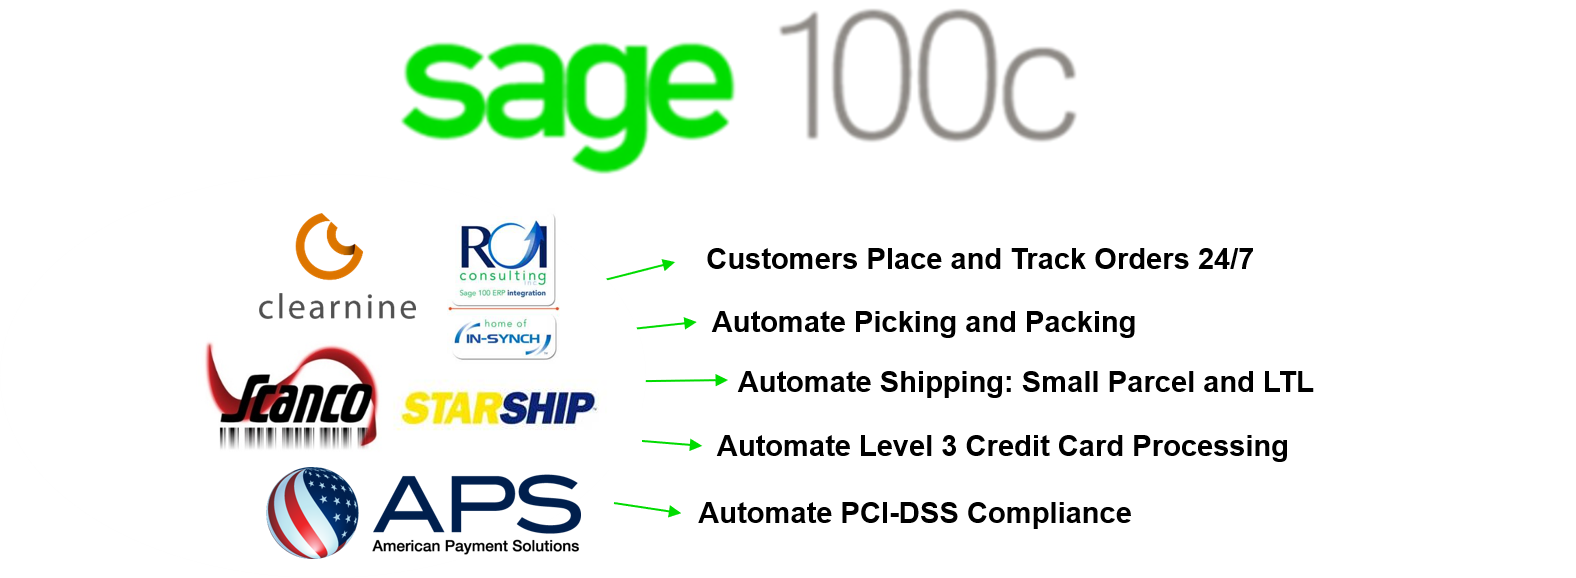 Sage 100c eCommerce 2